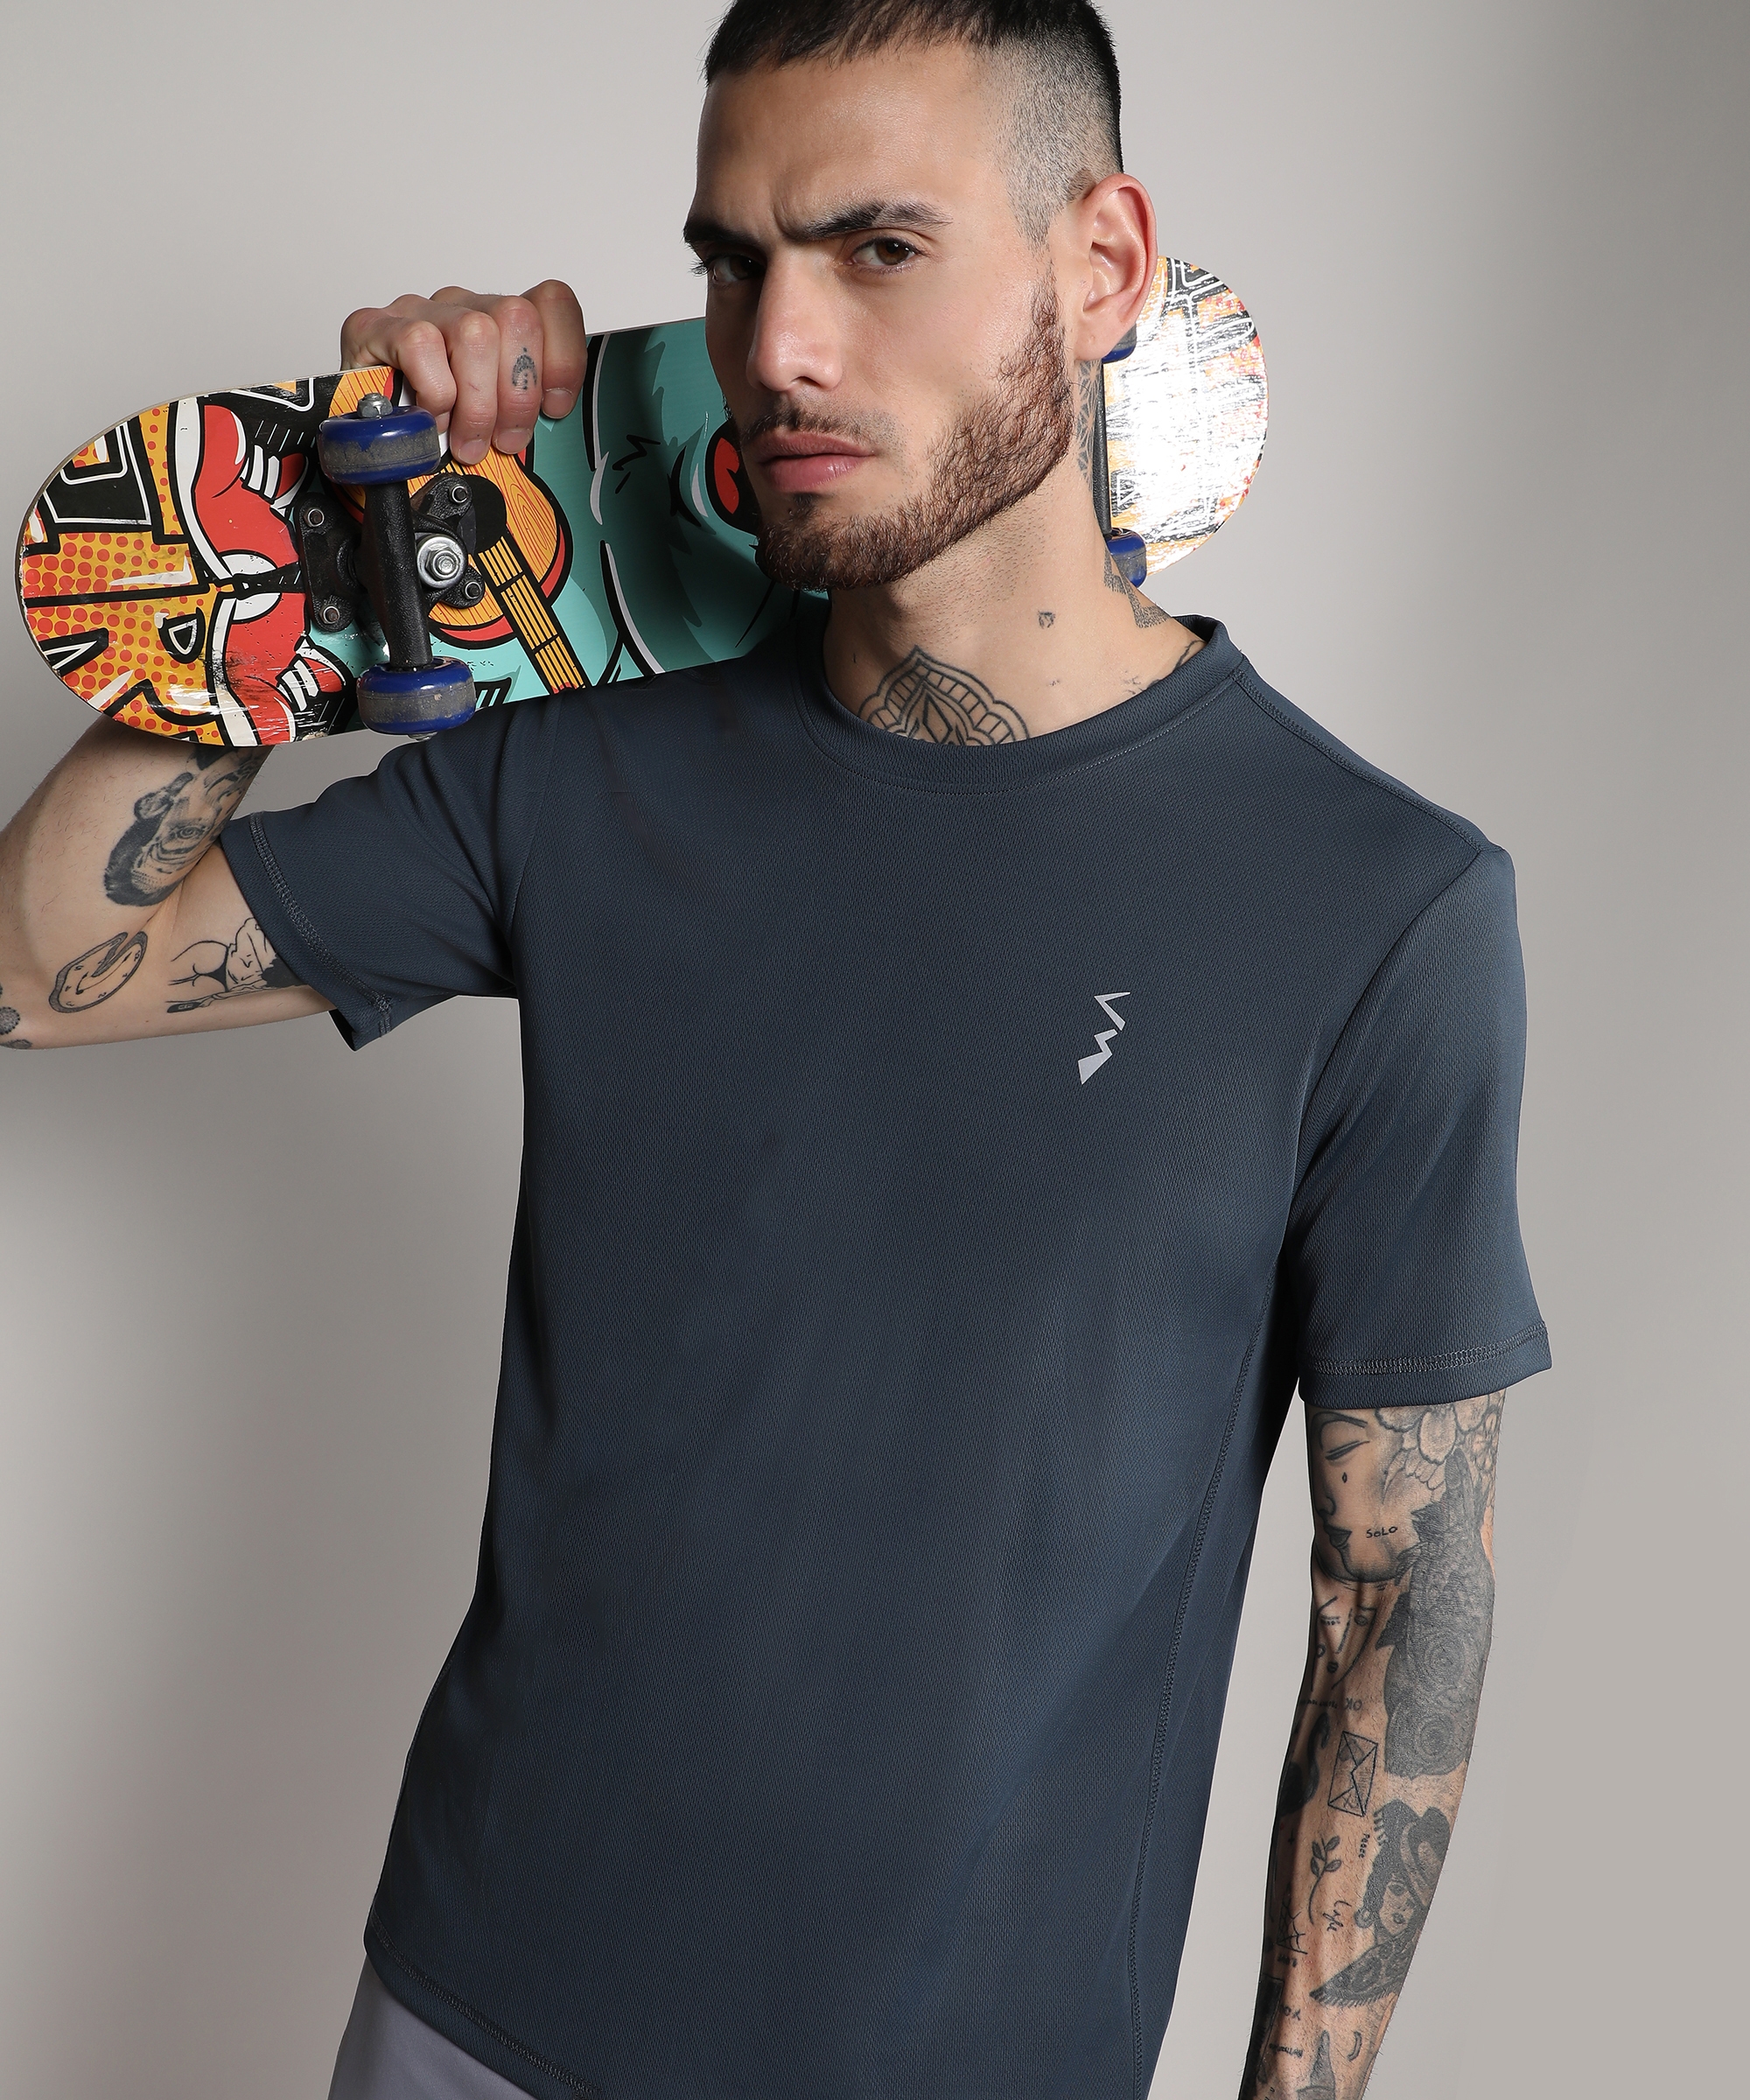 CAMPUS SUTRA | Men's Dark Grey Solid Activewear T-Shirt